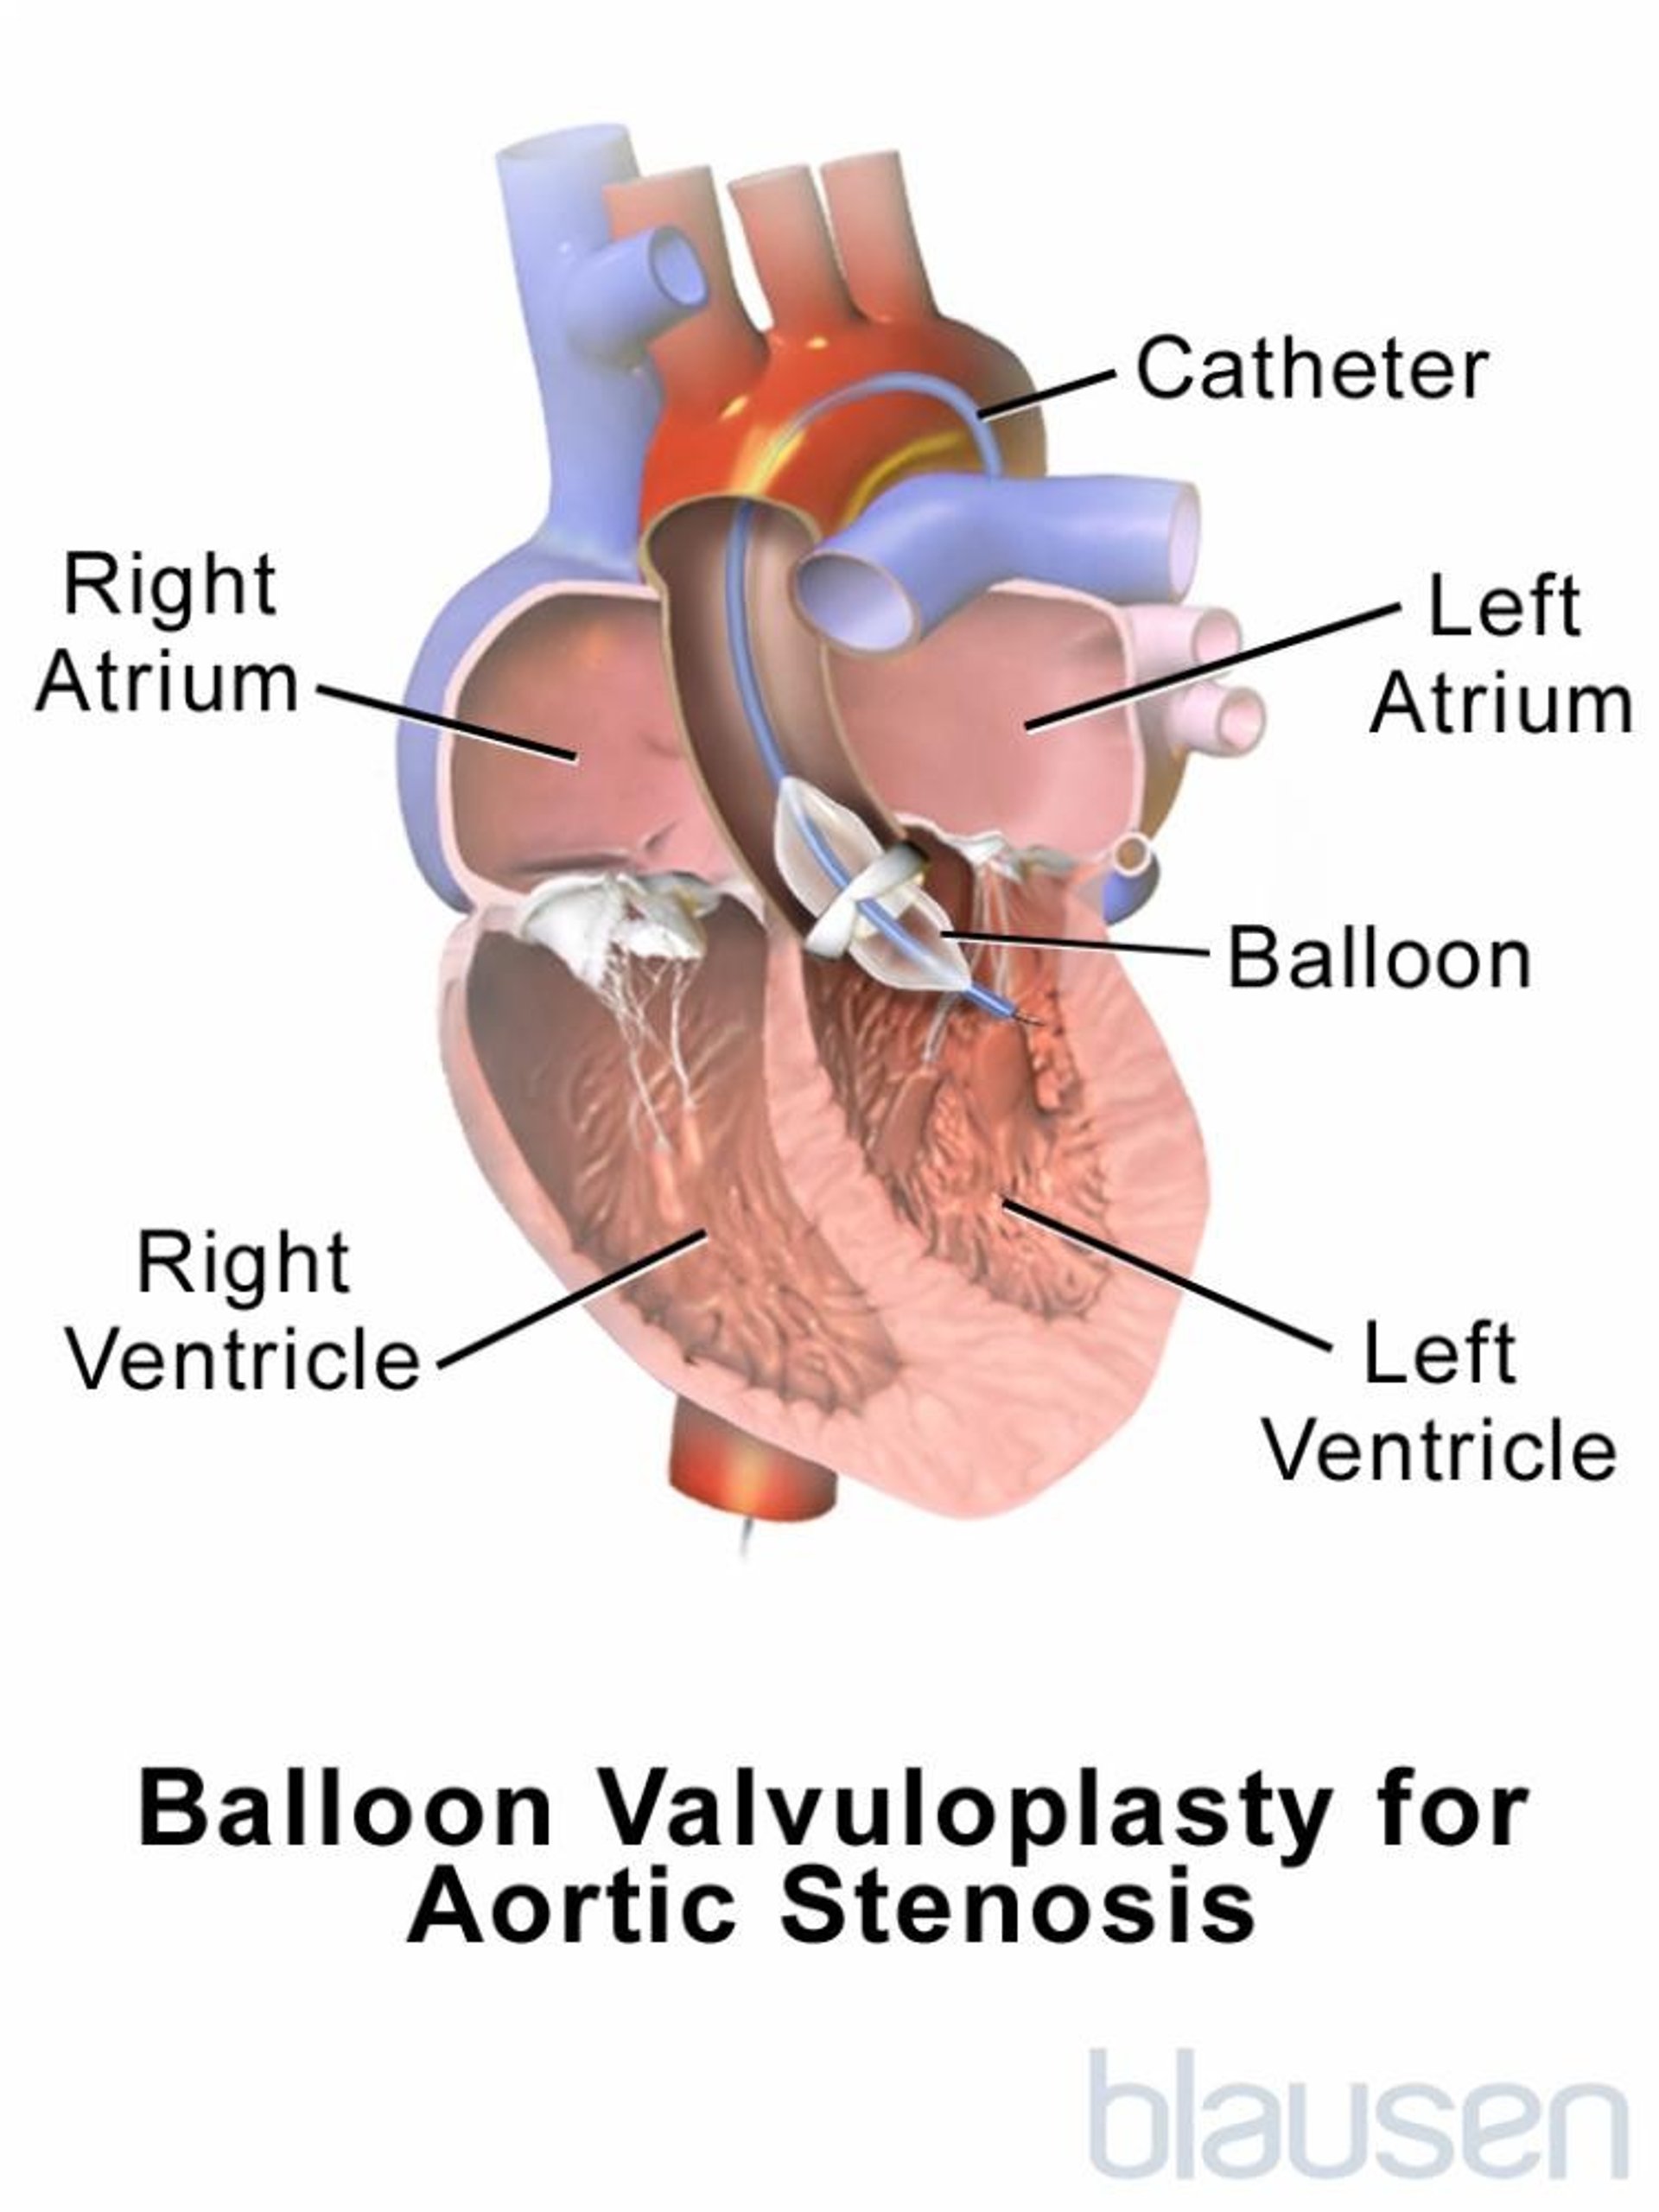 Balloon Valvuloplasty for Aortic Stenosis